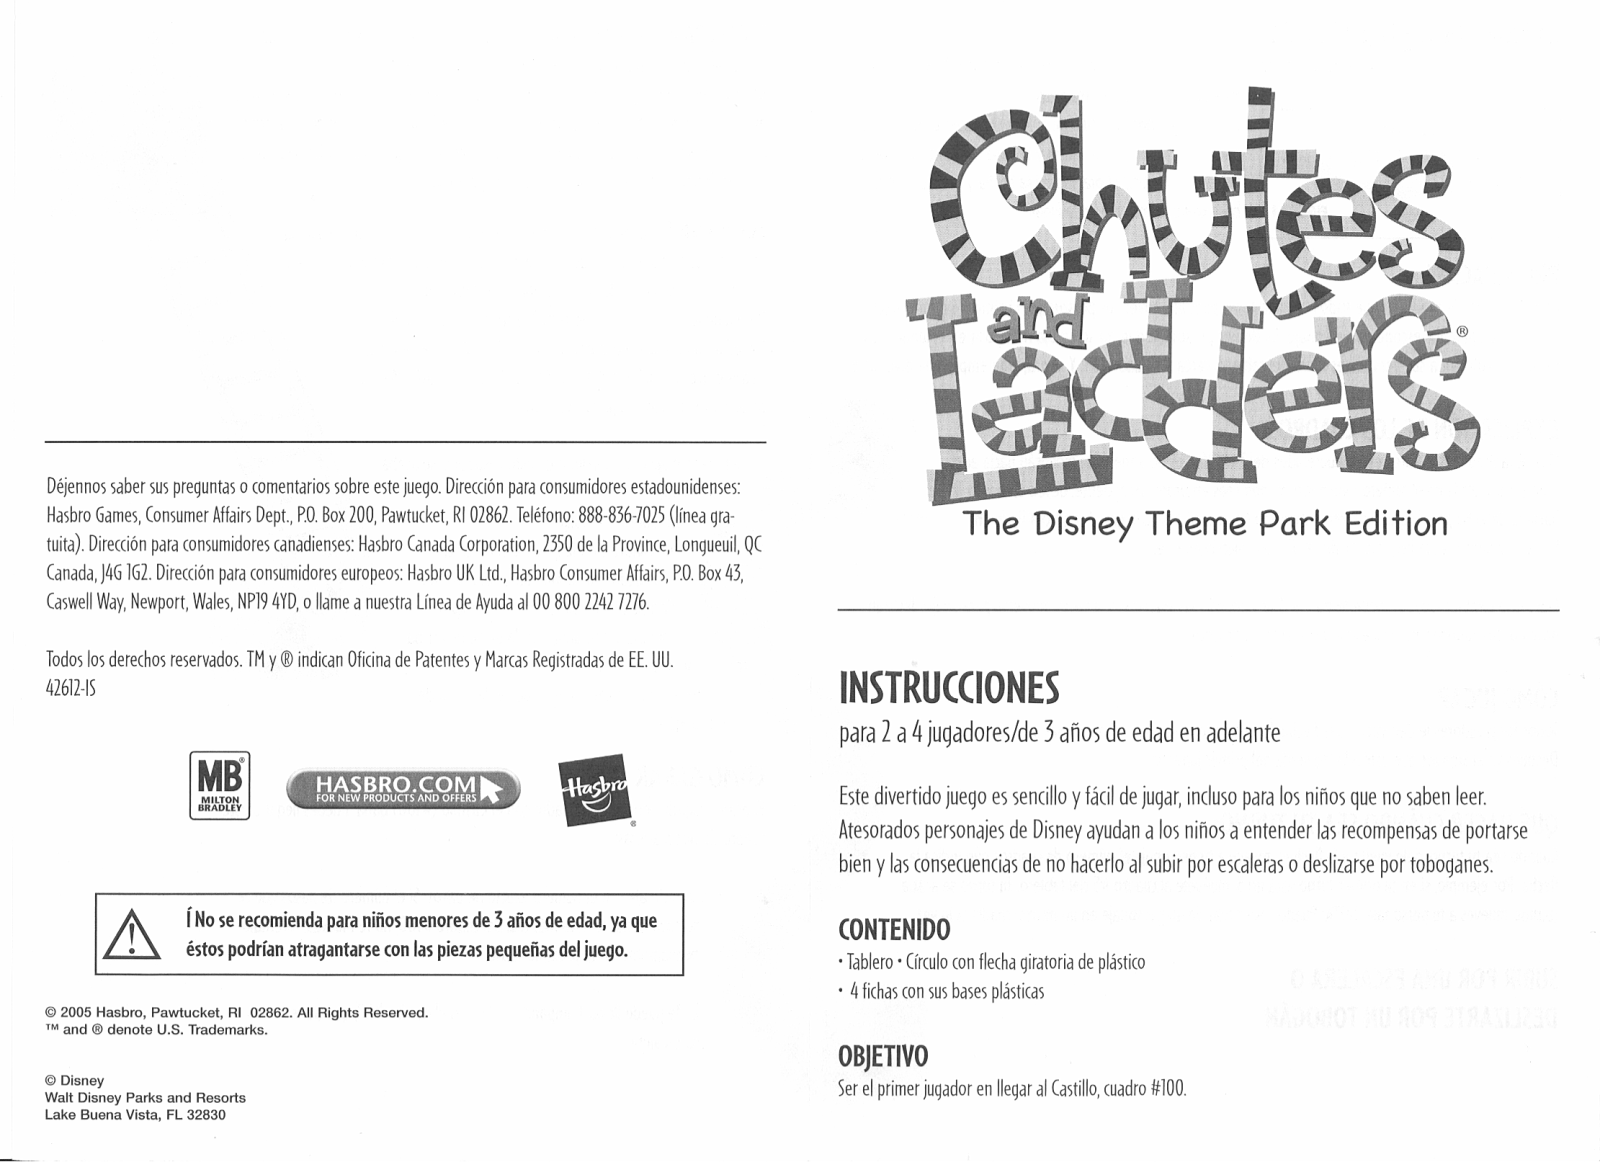 HASBRO Chutes and Ladders Disney Theme Park Edition User Manual